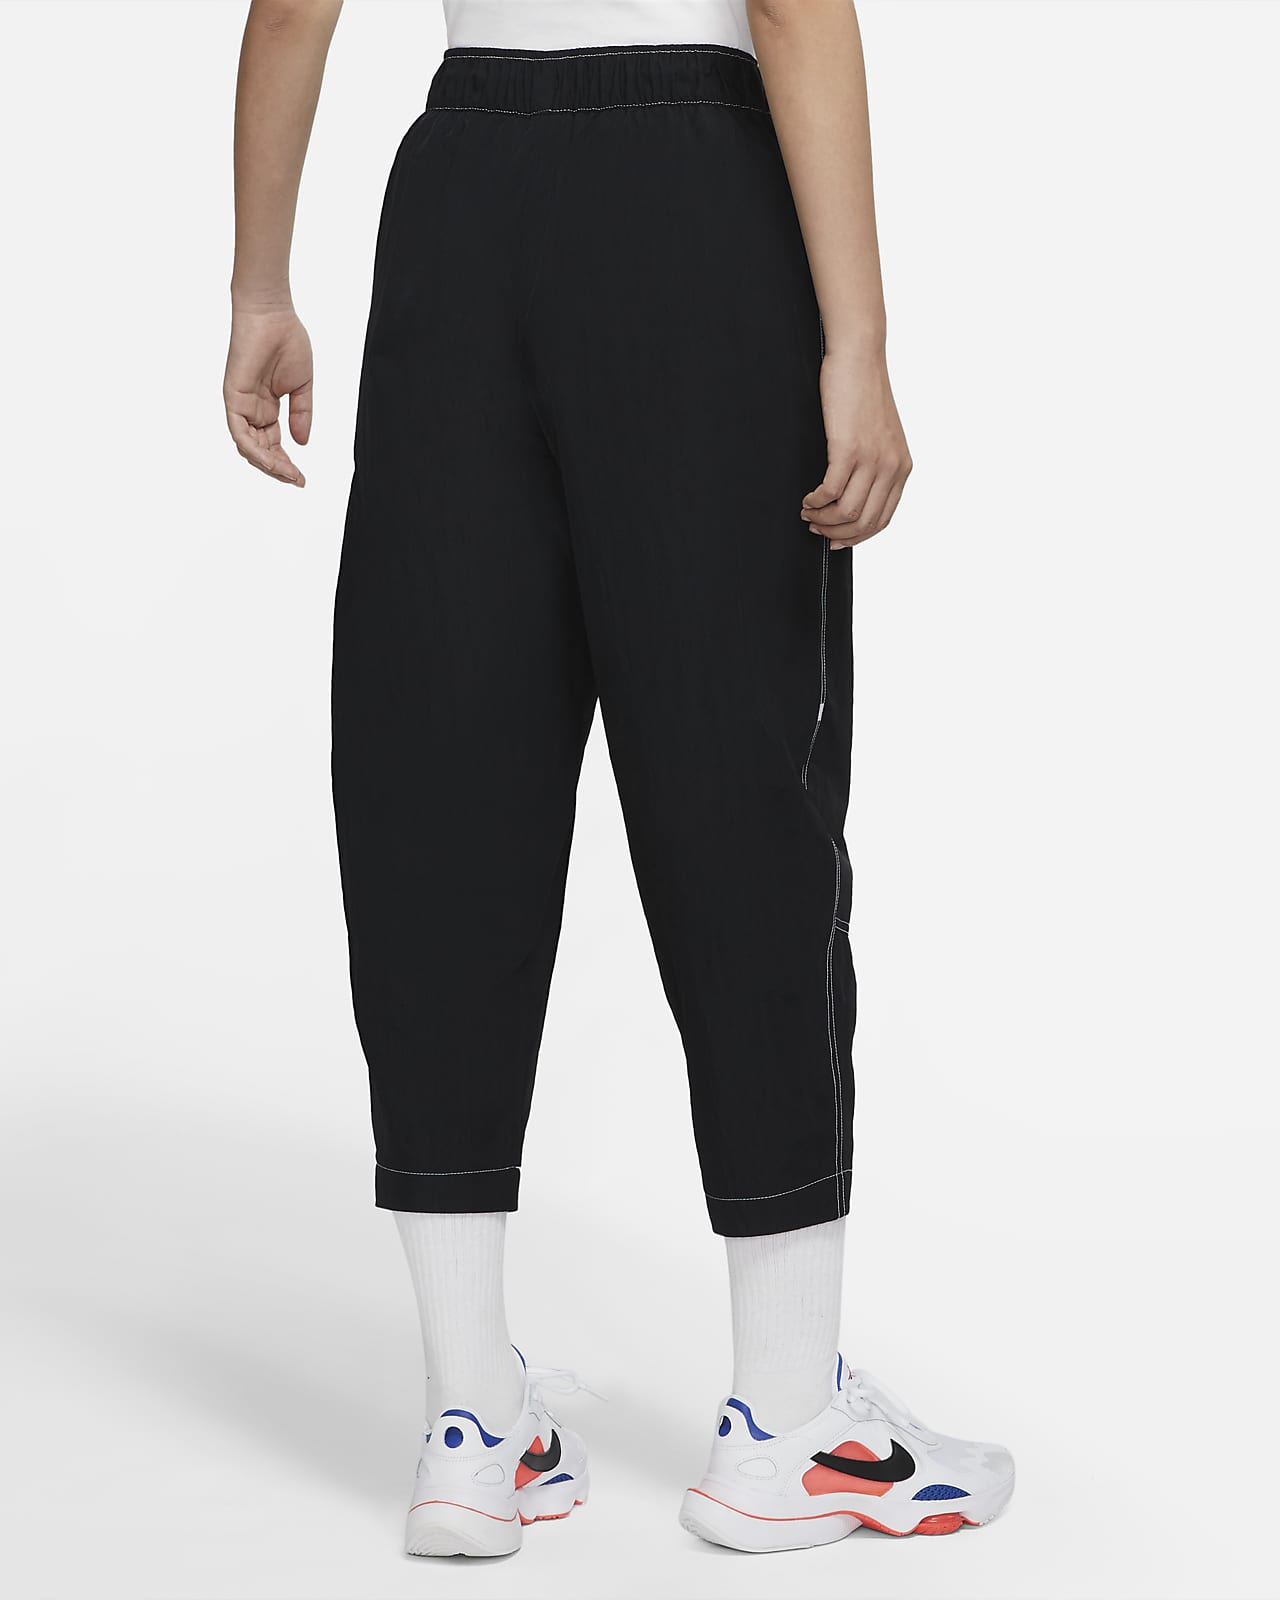 Nike Womens Sports Wear Indio Woven Pants CJ3006-100 Size S